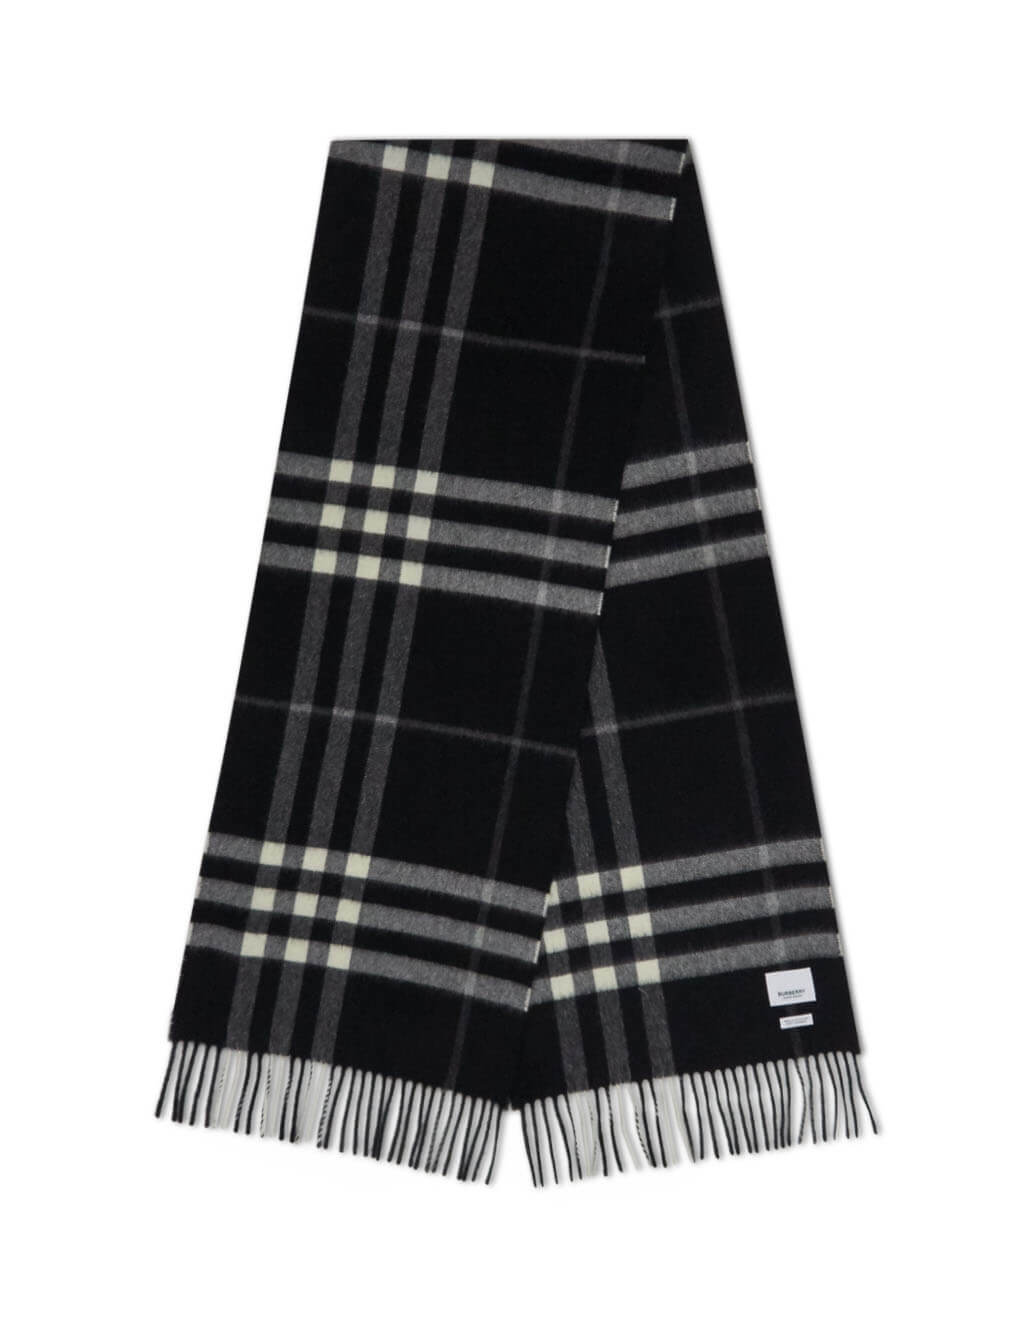 burberry women's cashmere scarf